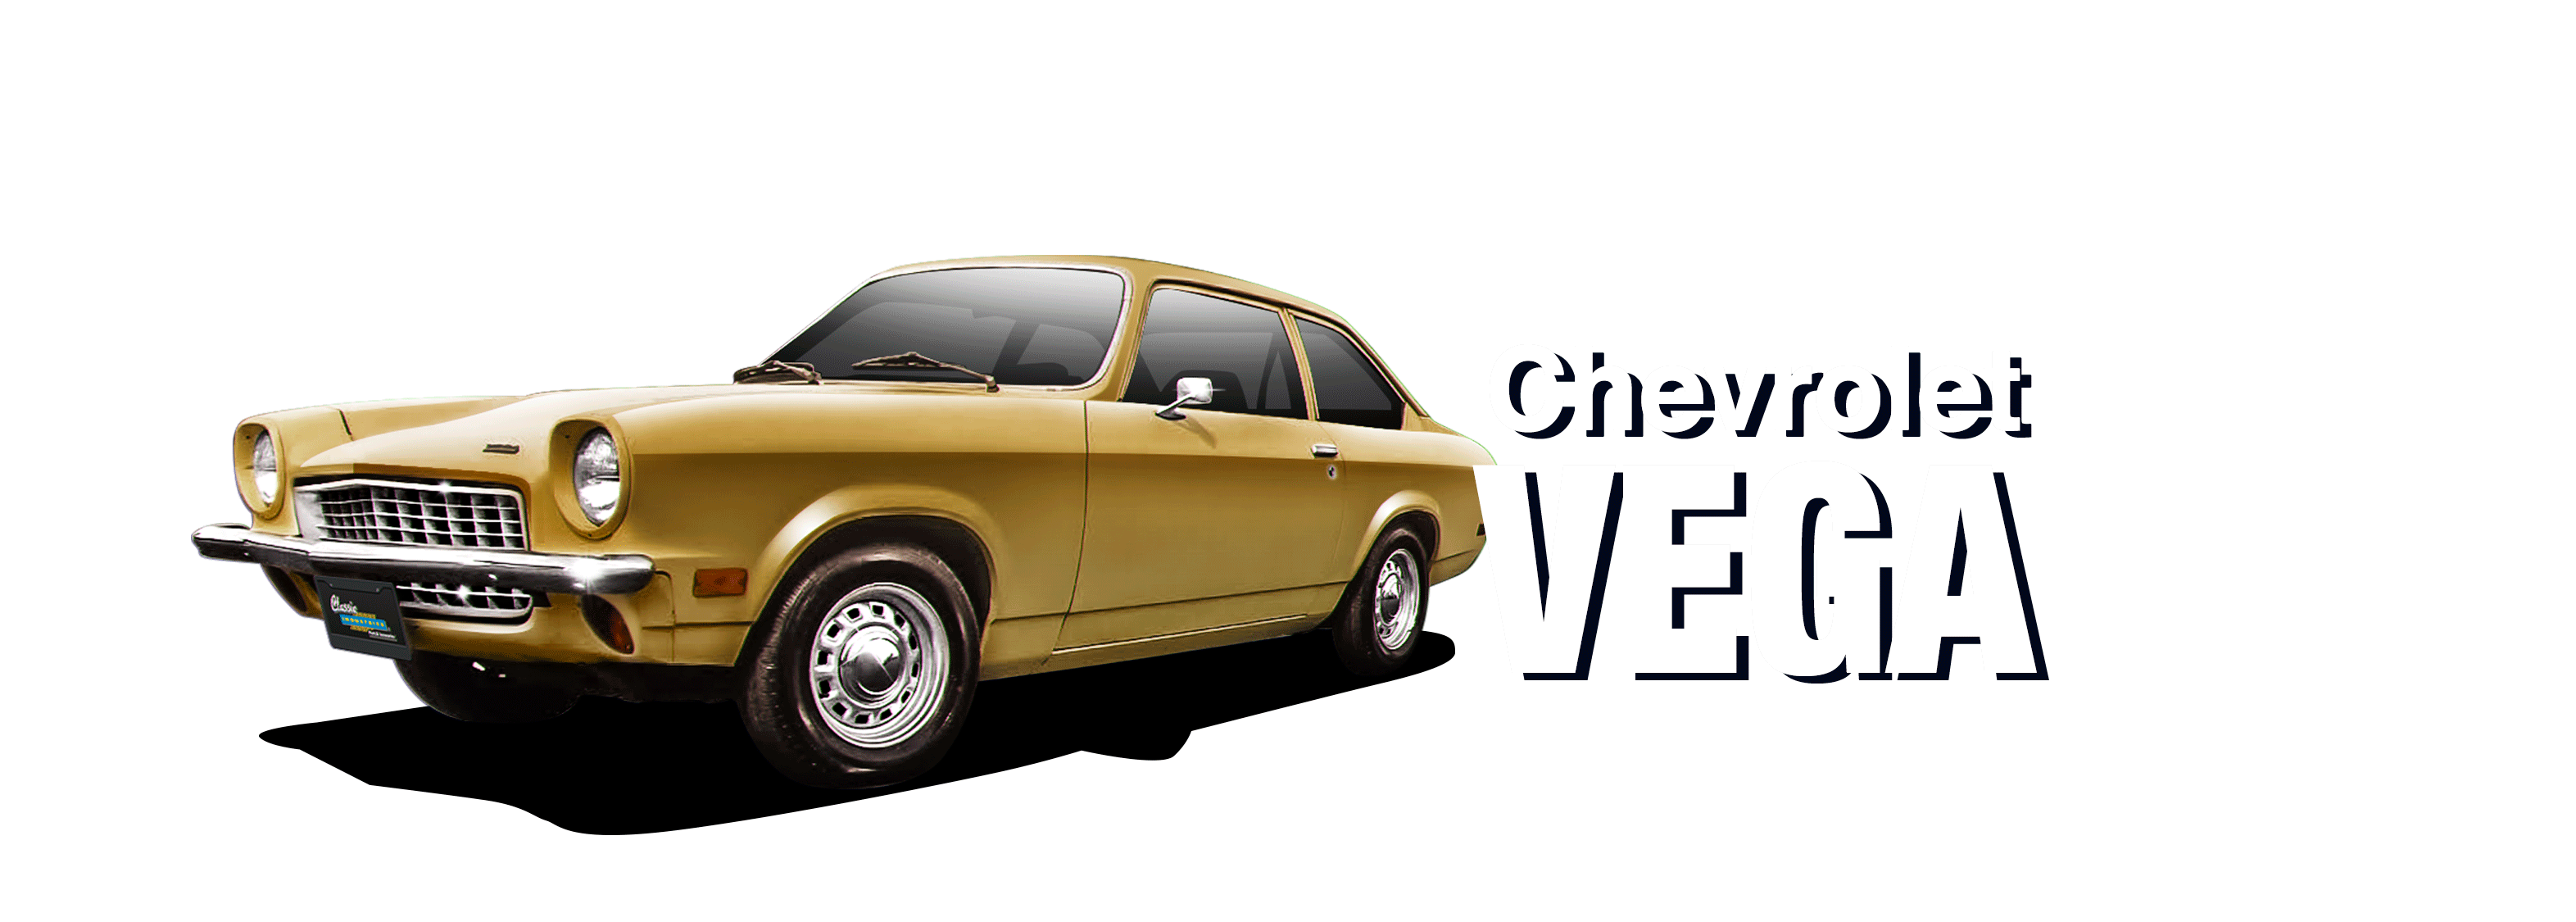 Chevrolet-Vega-vehicle-desktop